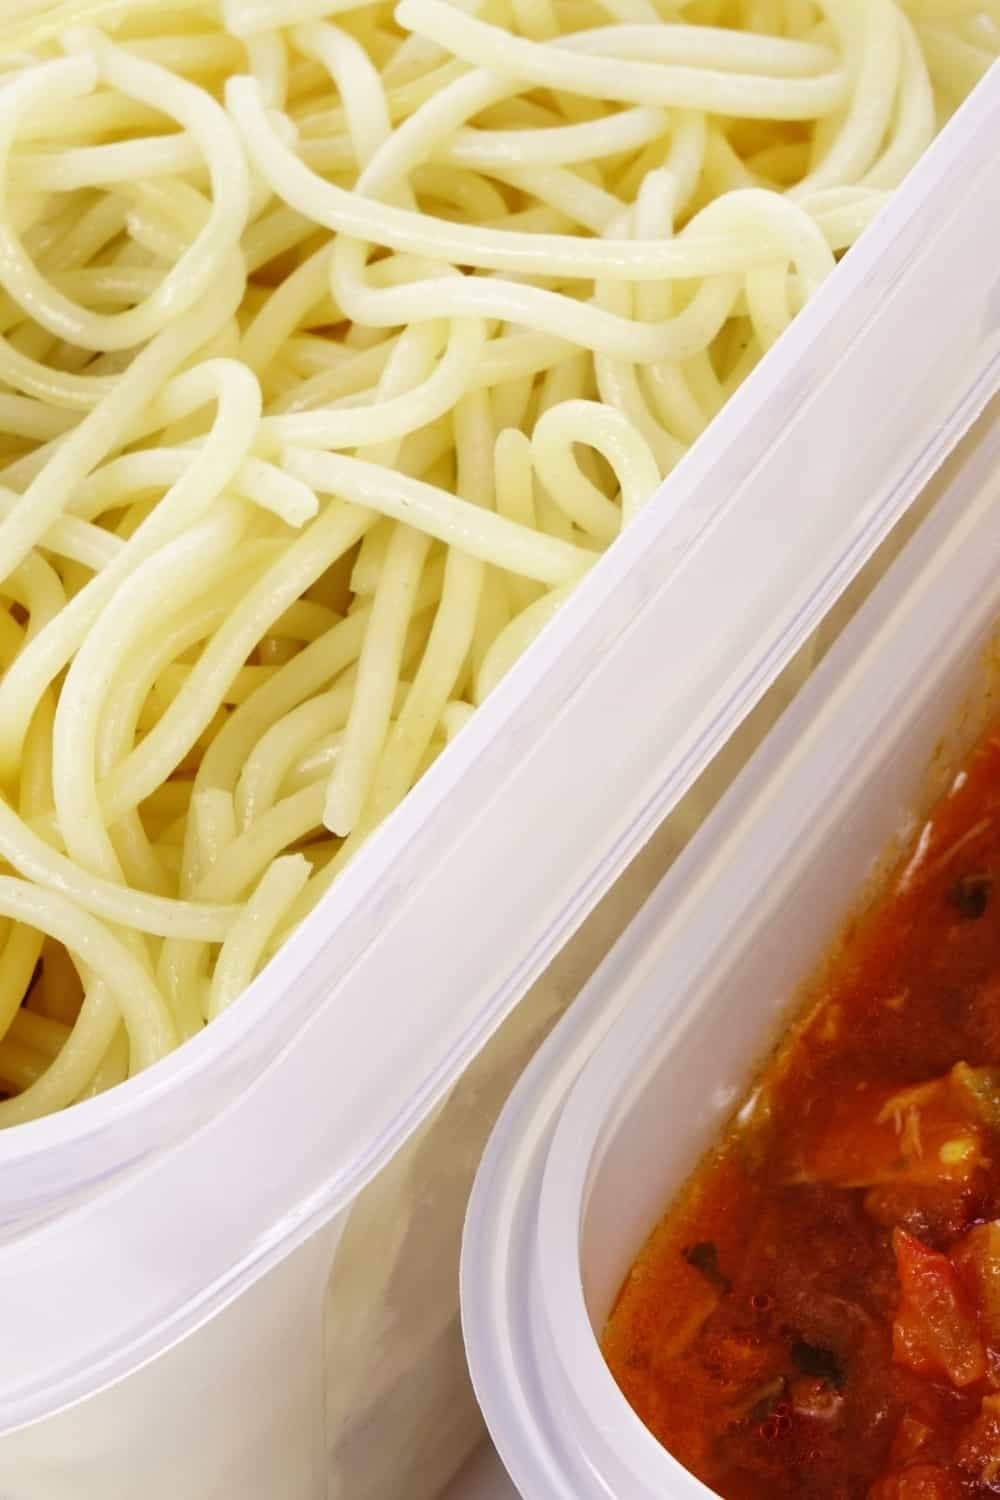 spaghetti and tomato sauce in plastic containers